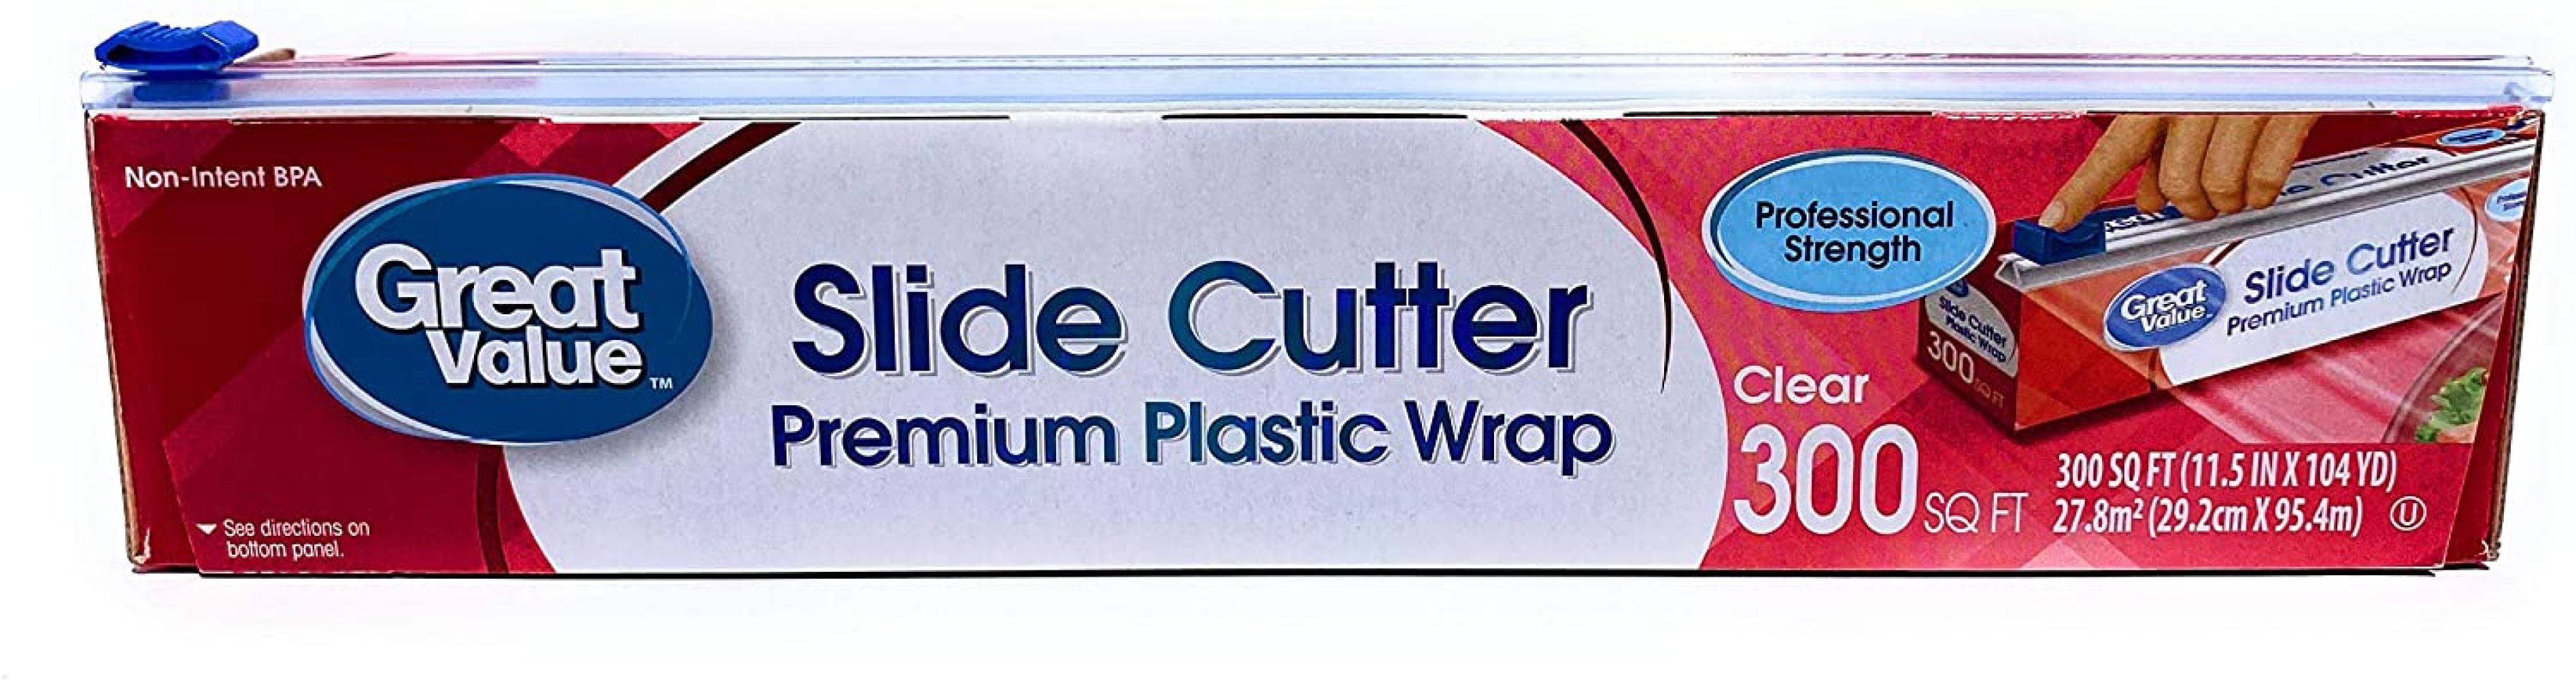 Great Value Slide Cutter Clear Premium Plastic Wrap, 300 sq ft 